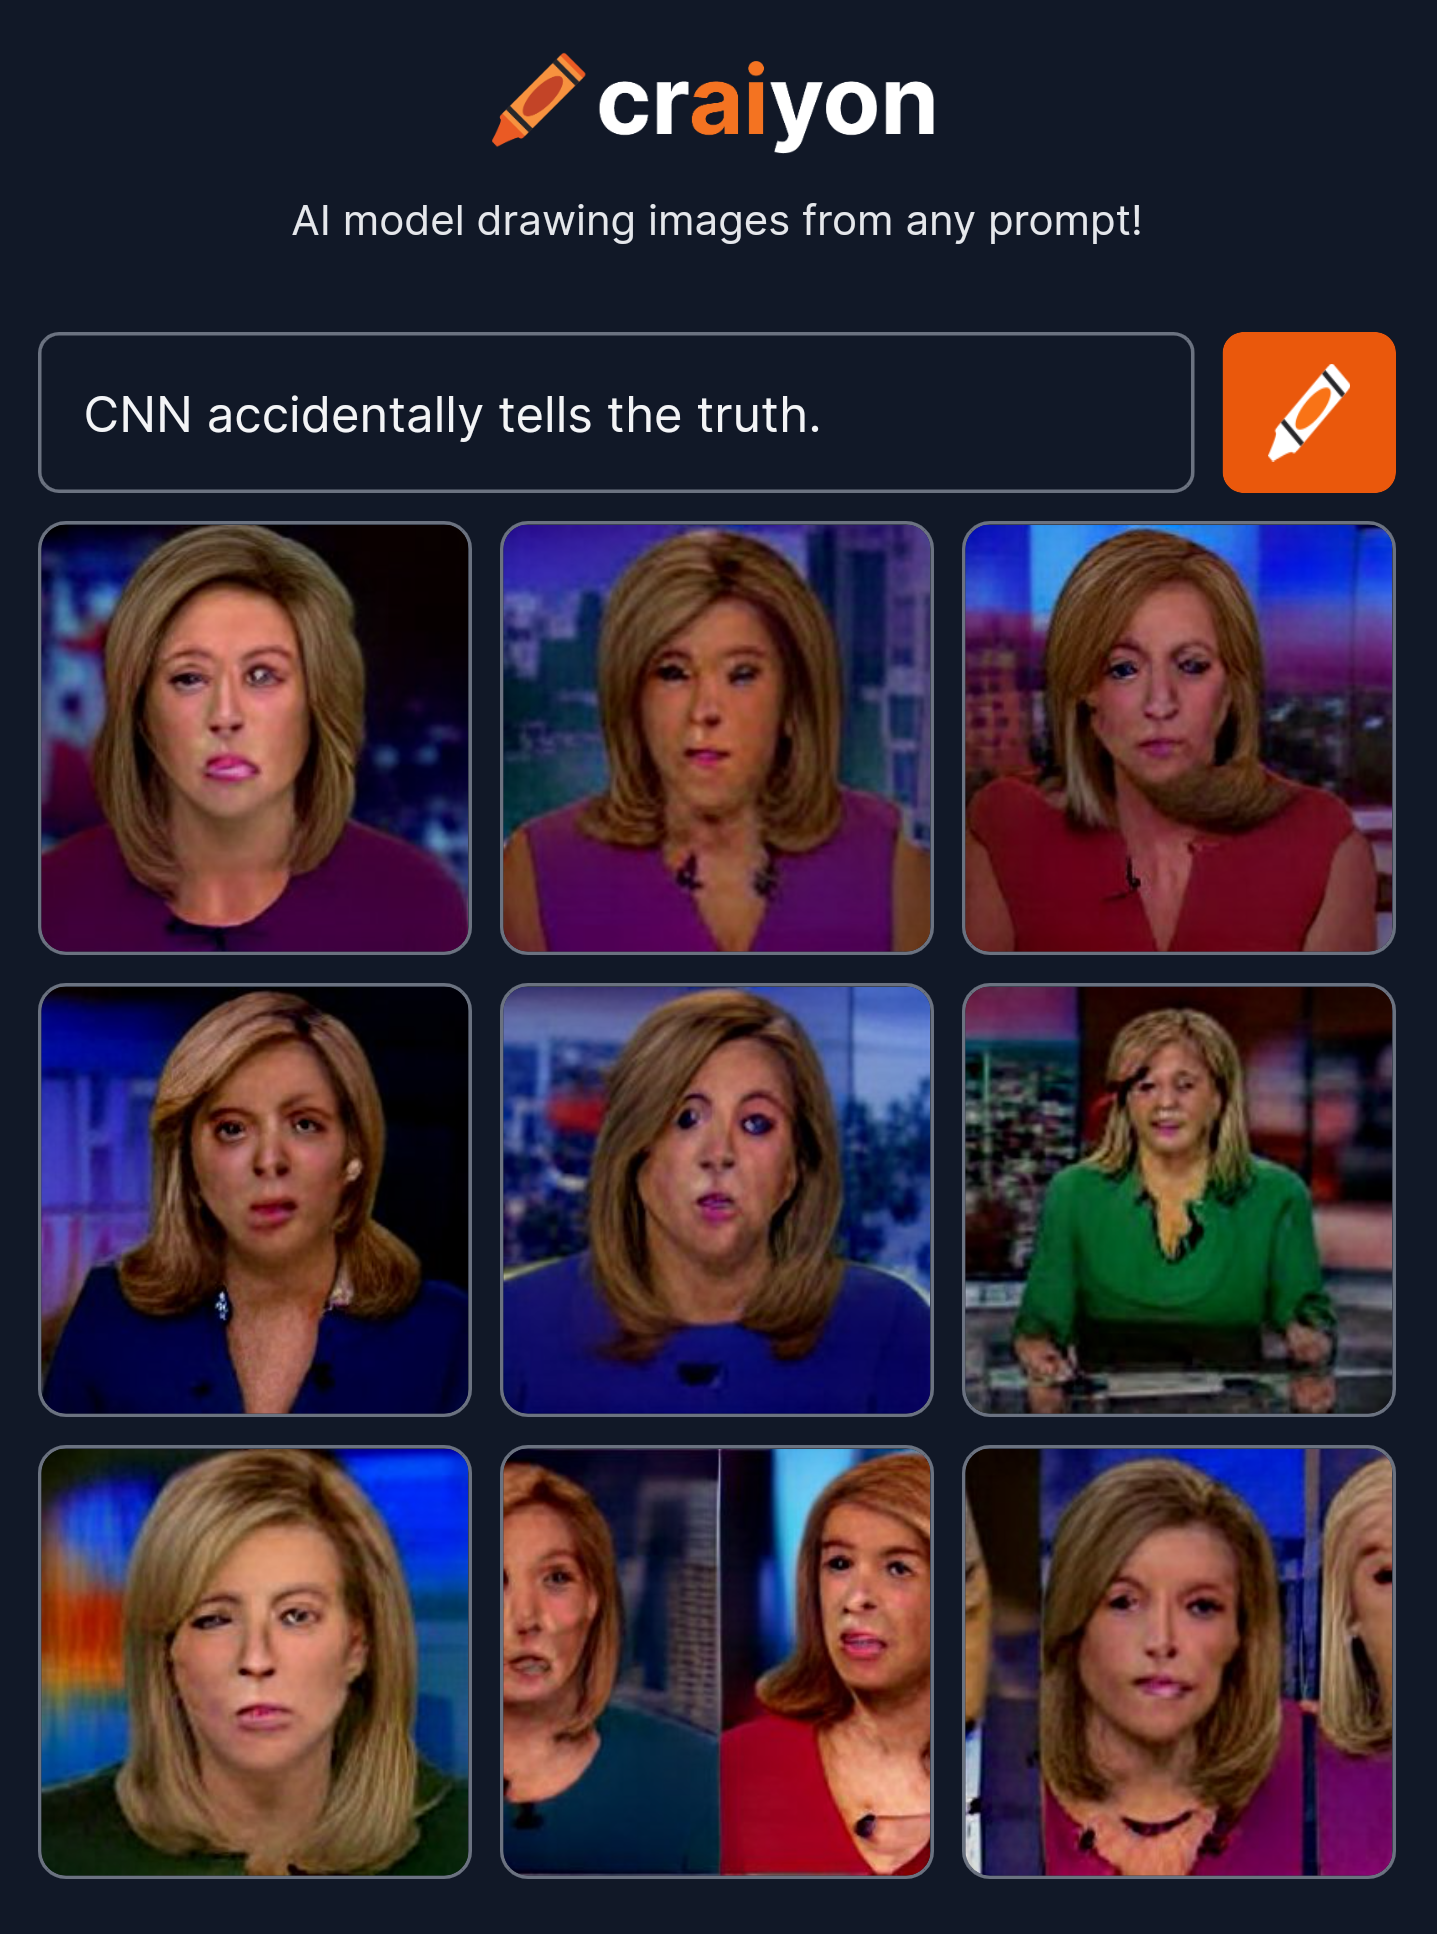 craiyon_005205_CNN_accidentally_tells_the_truth_.png